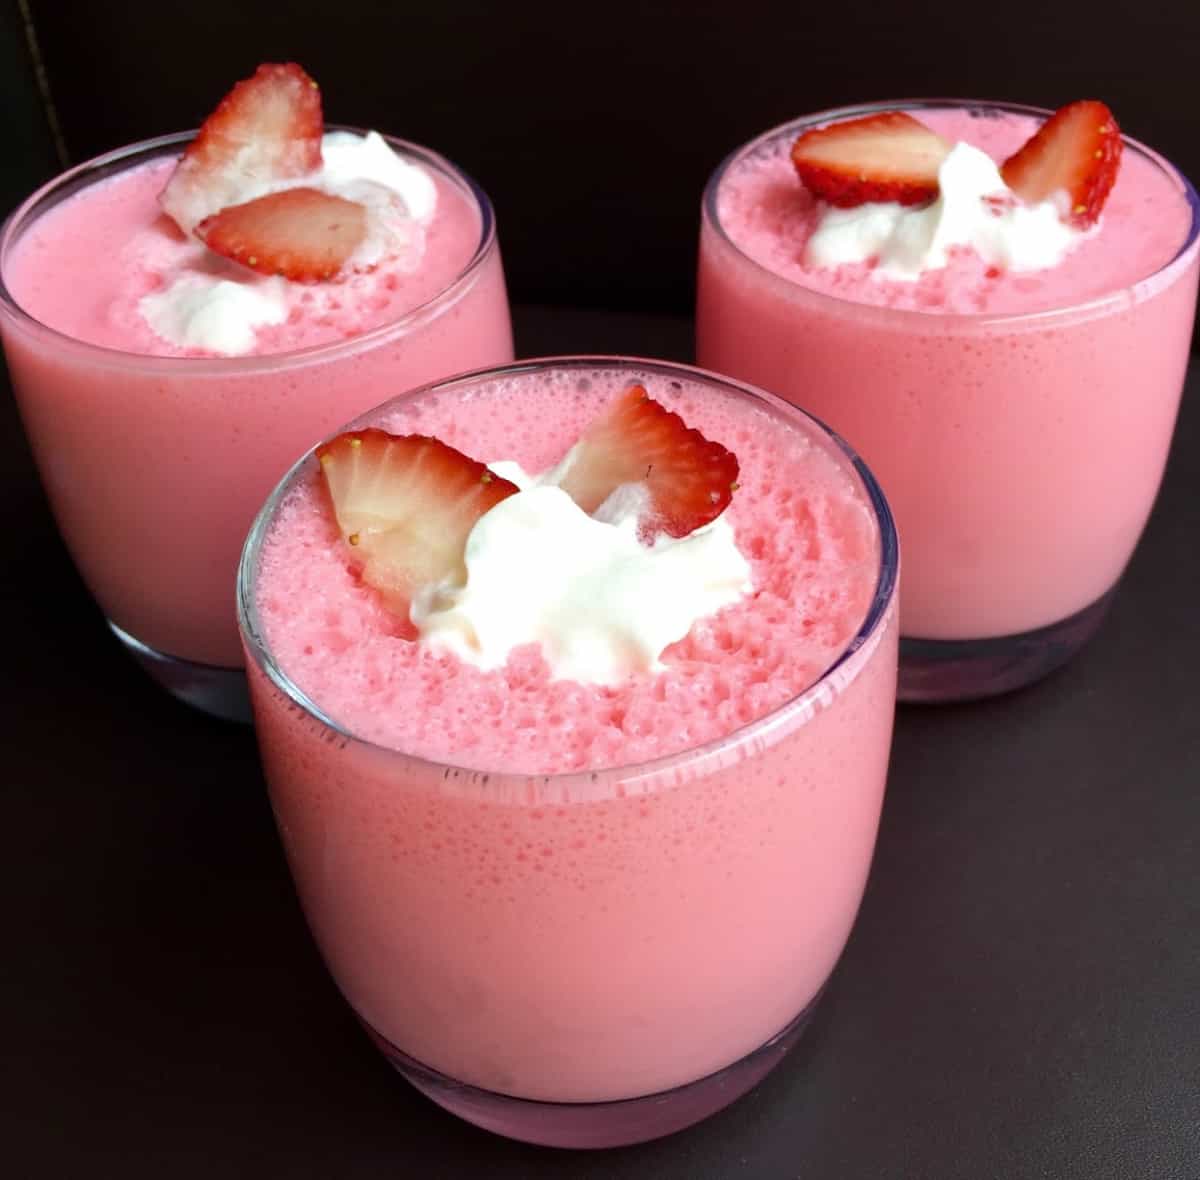 Strawberry Jello yogurt fluff topped with strawberry slices.